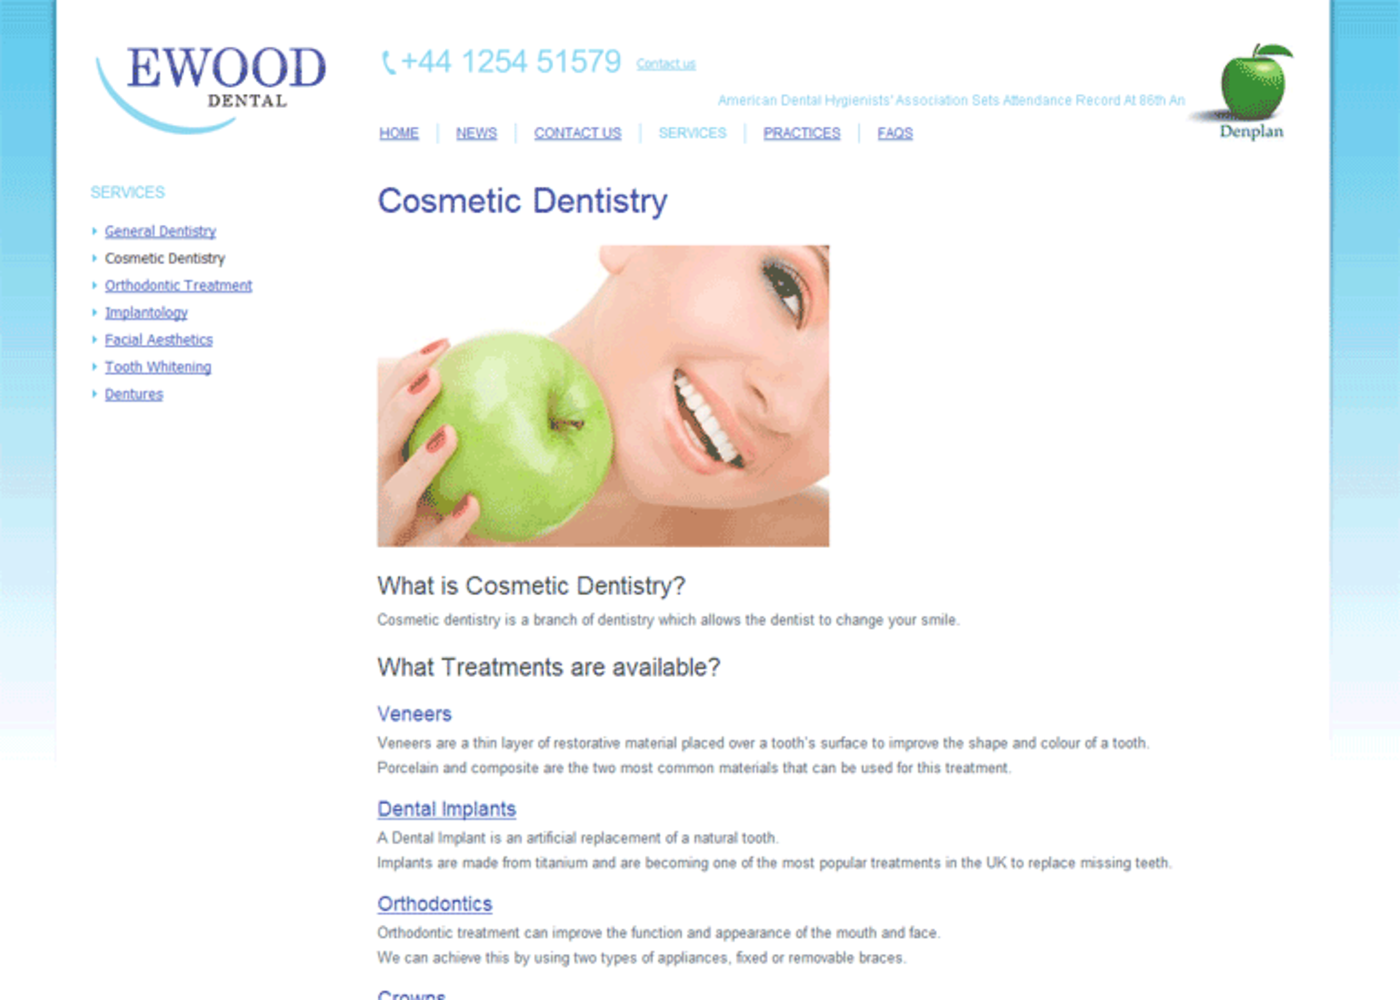 Ewood Dental (2009) Cosmetic Dentistry